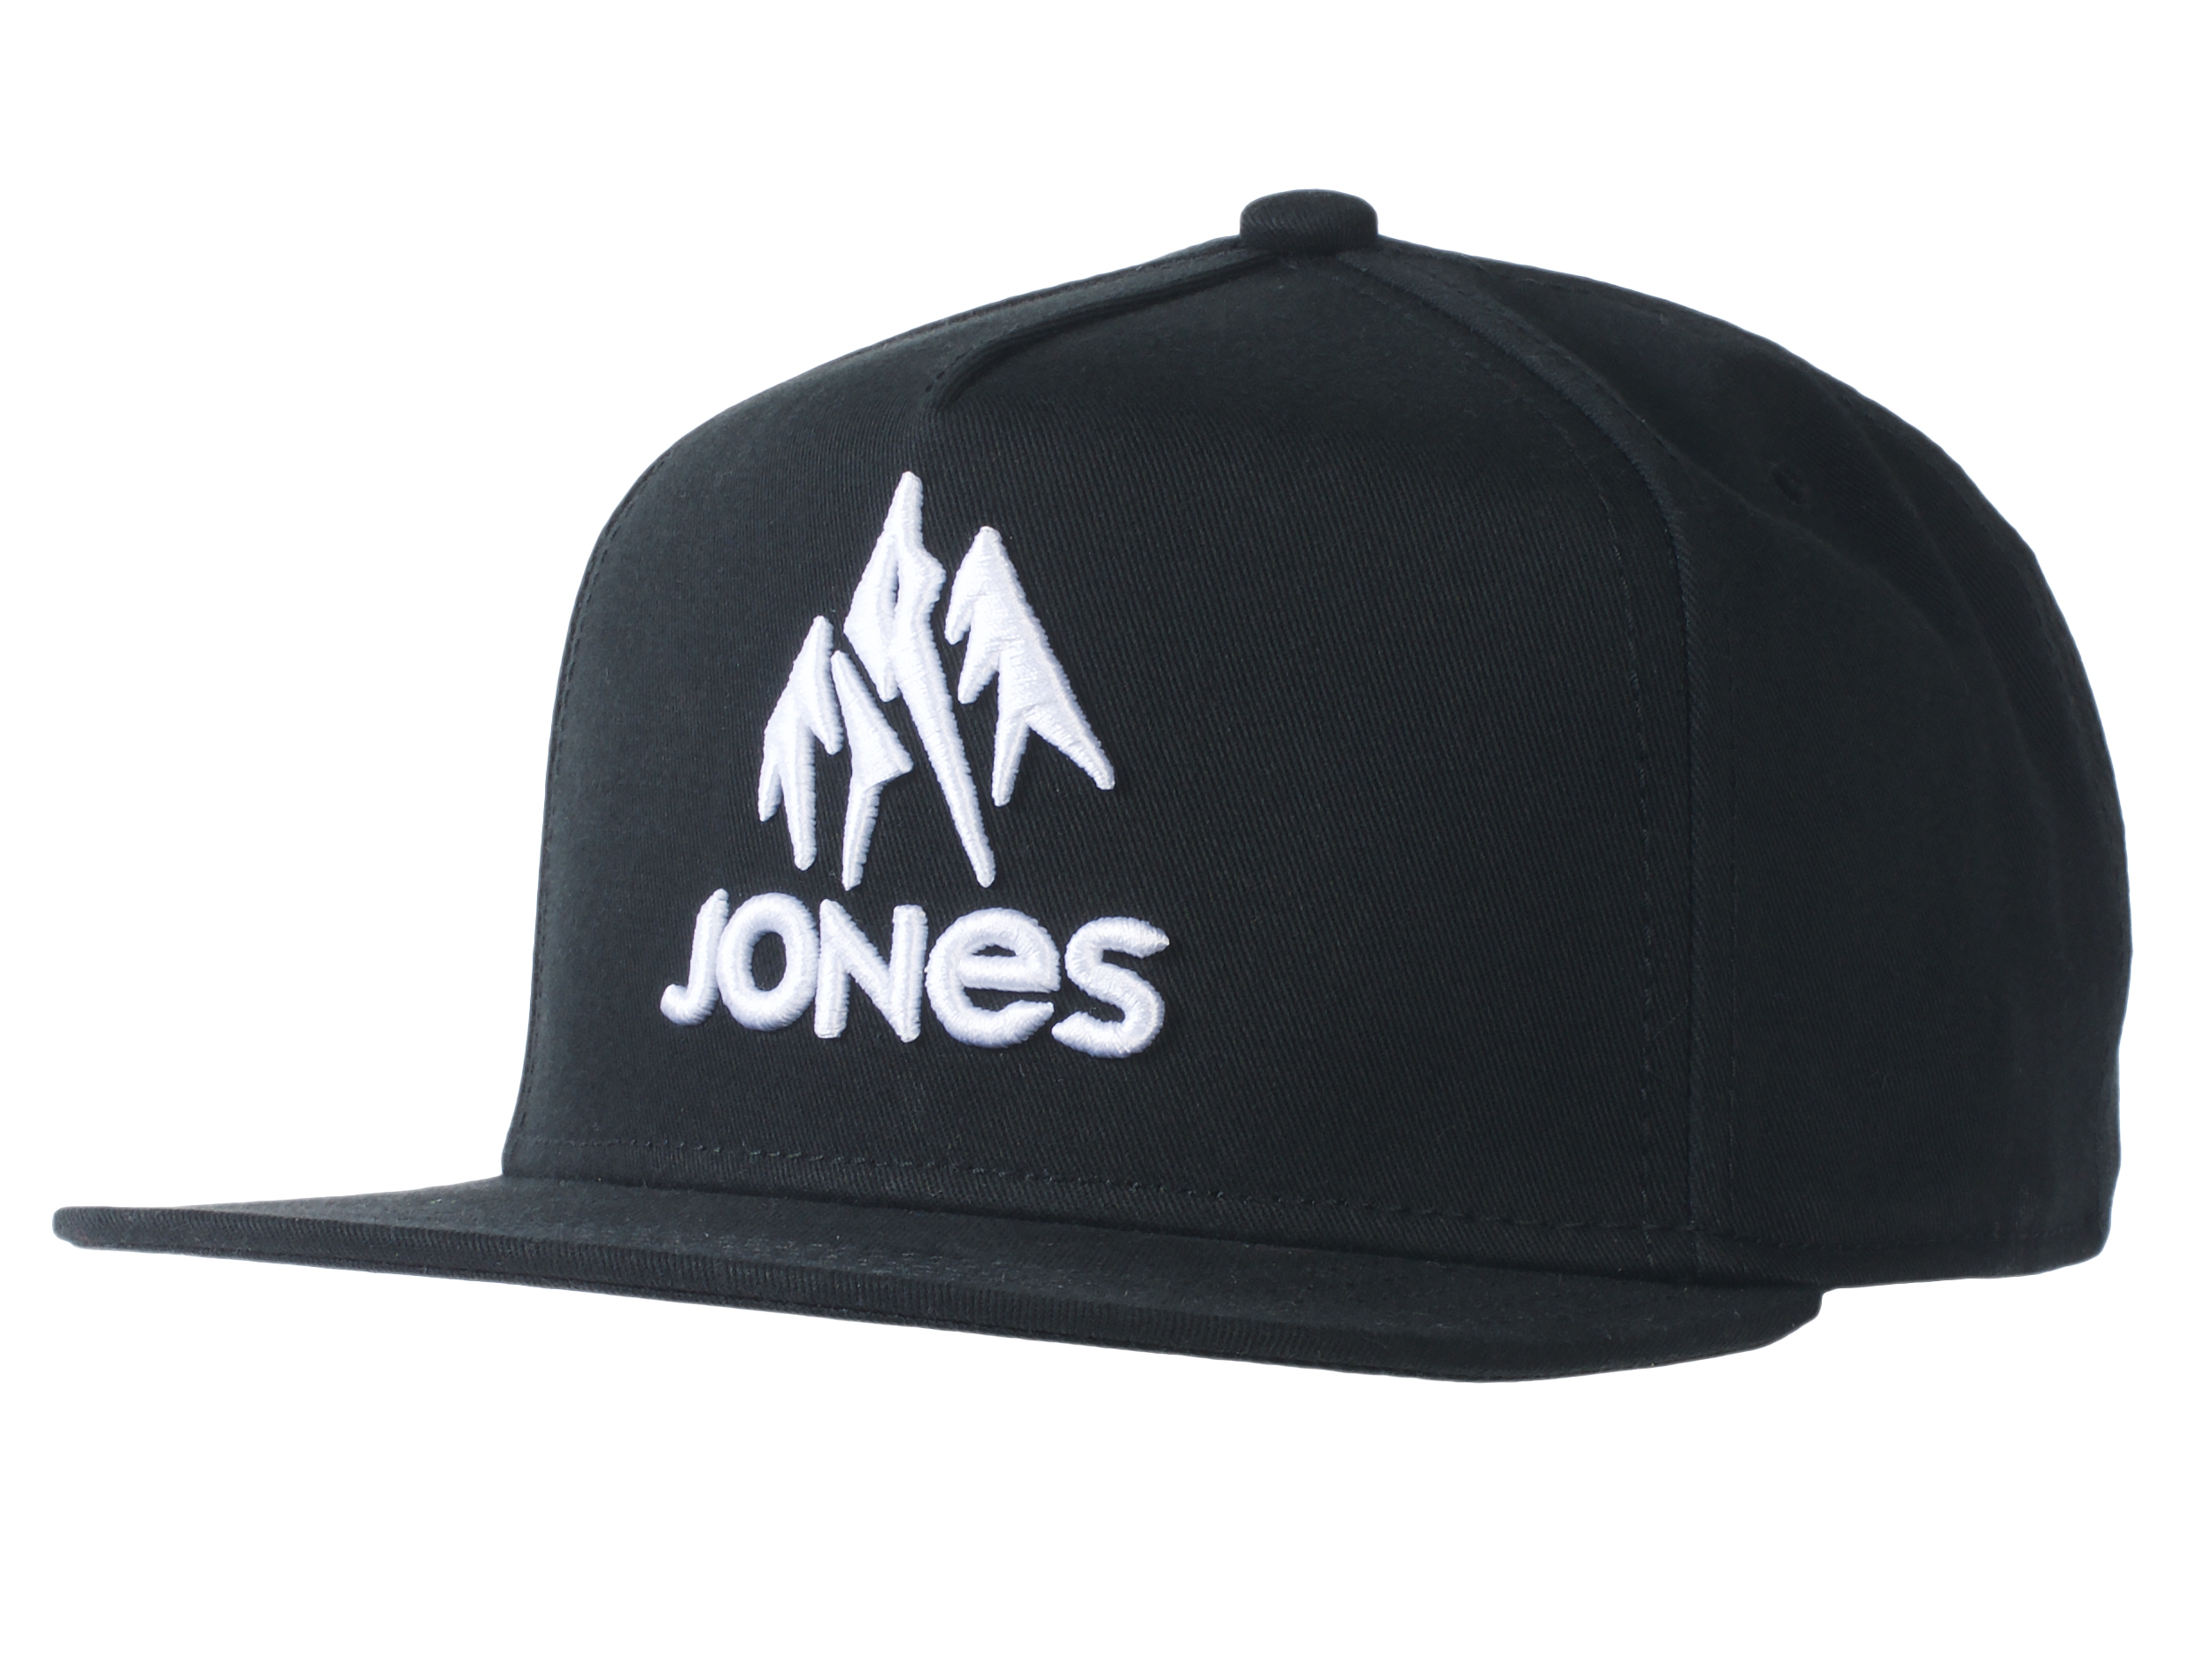 5. Jones Jackson Cap Black